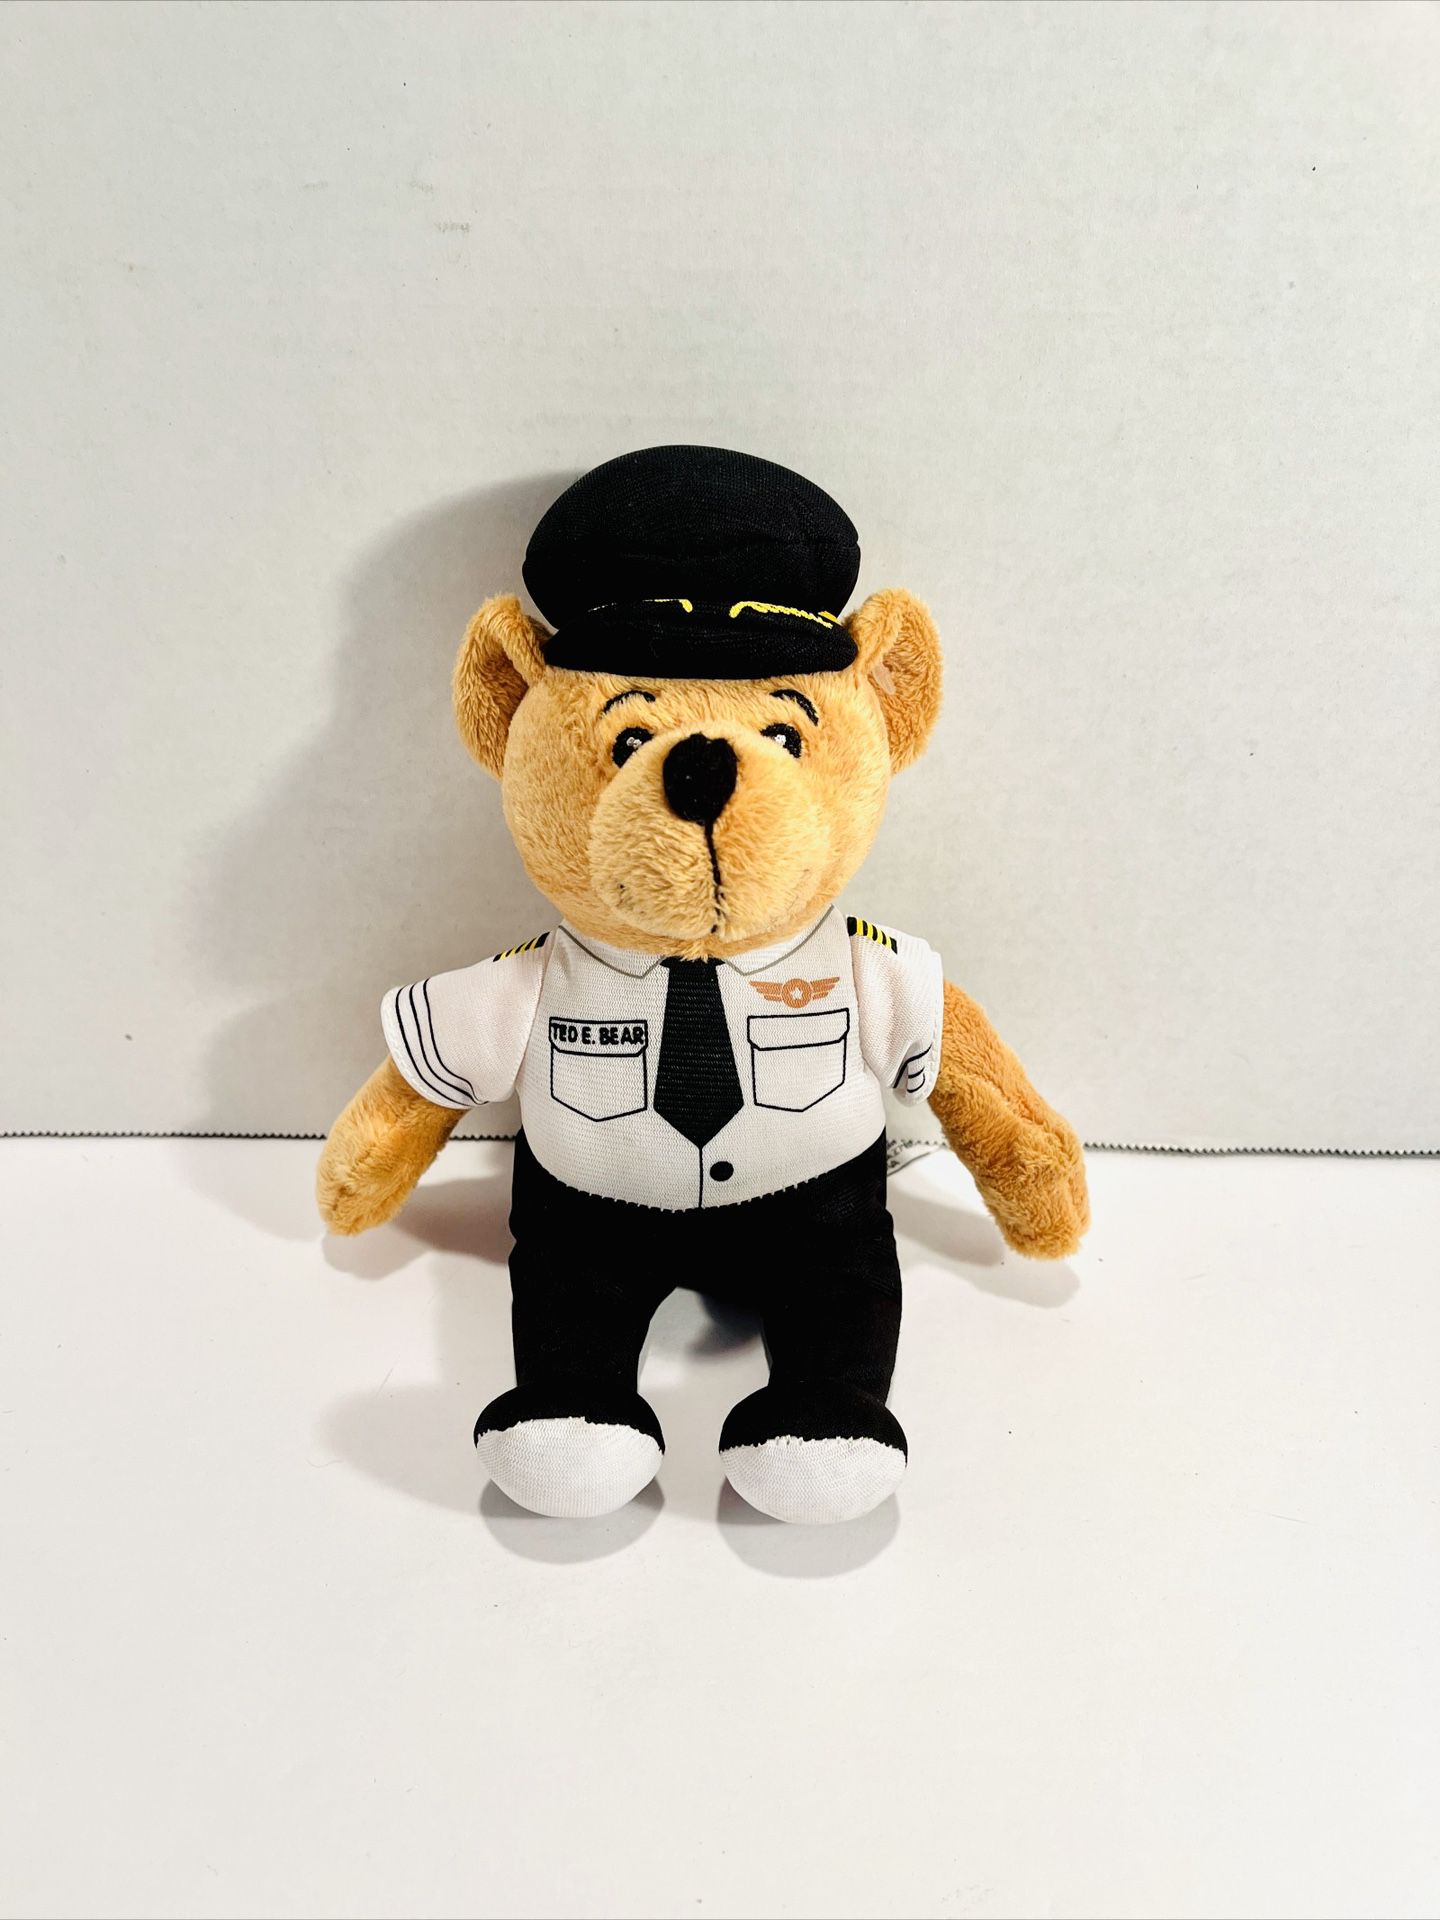 The RGU Group Teddy Bear Airplane Pilot 2019 - 10” long